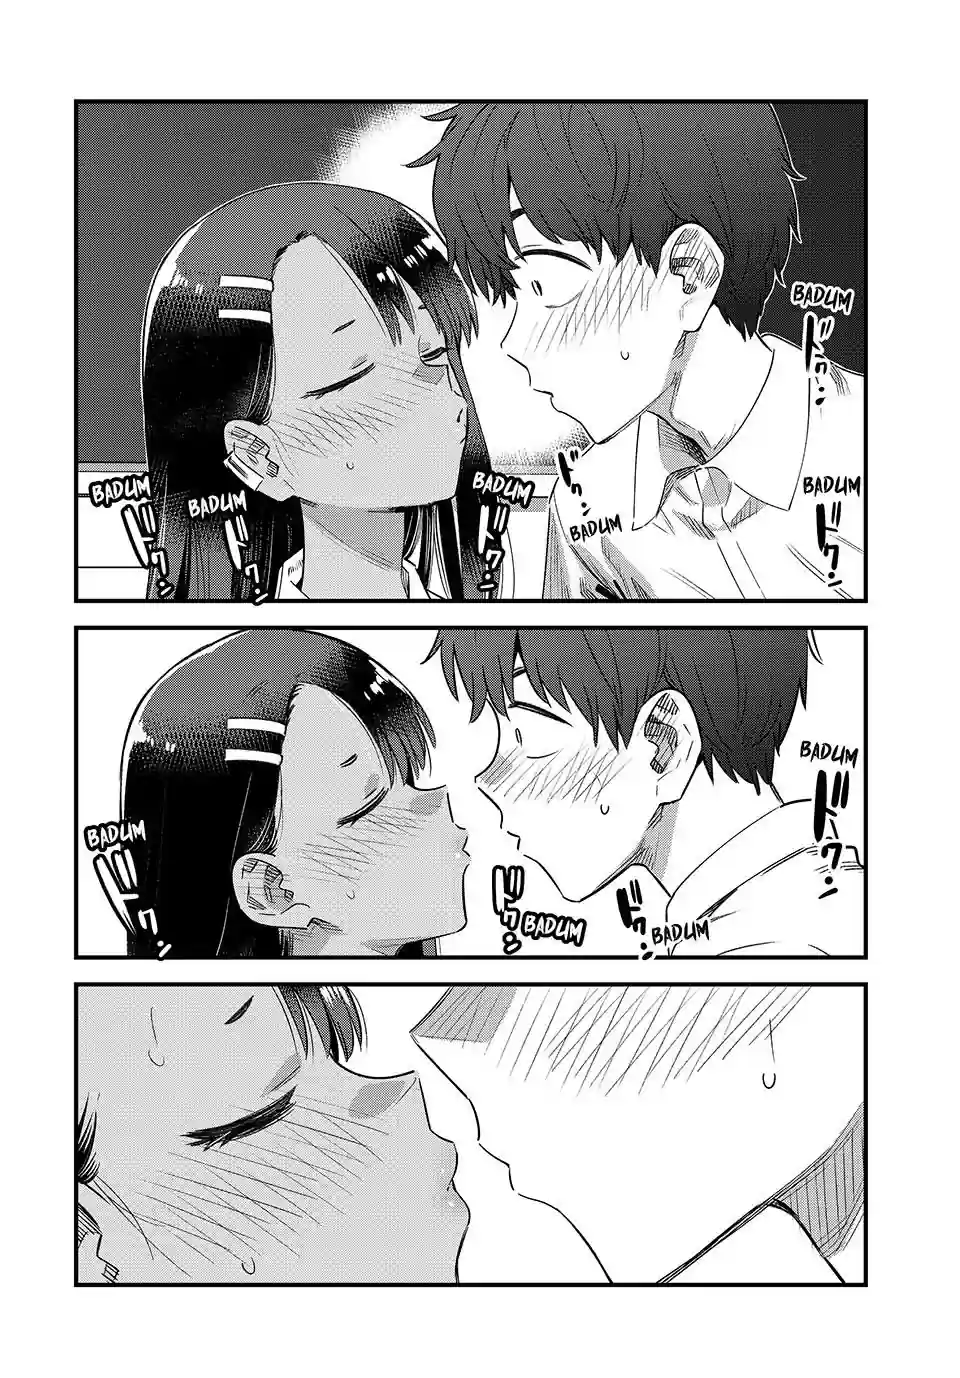 Nagatoro ch 148: Senpai kissed Nagatoro